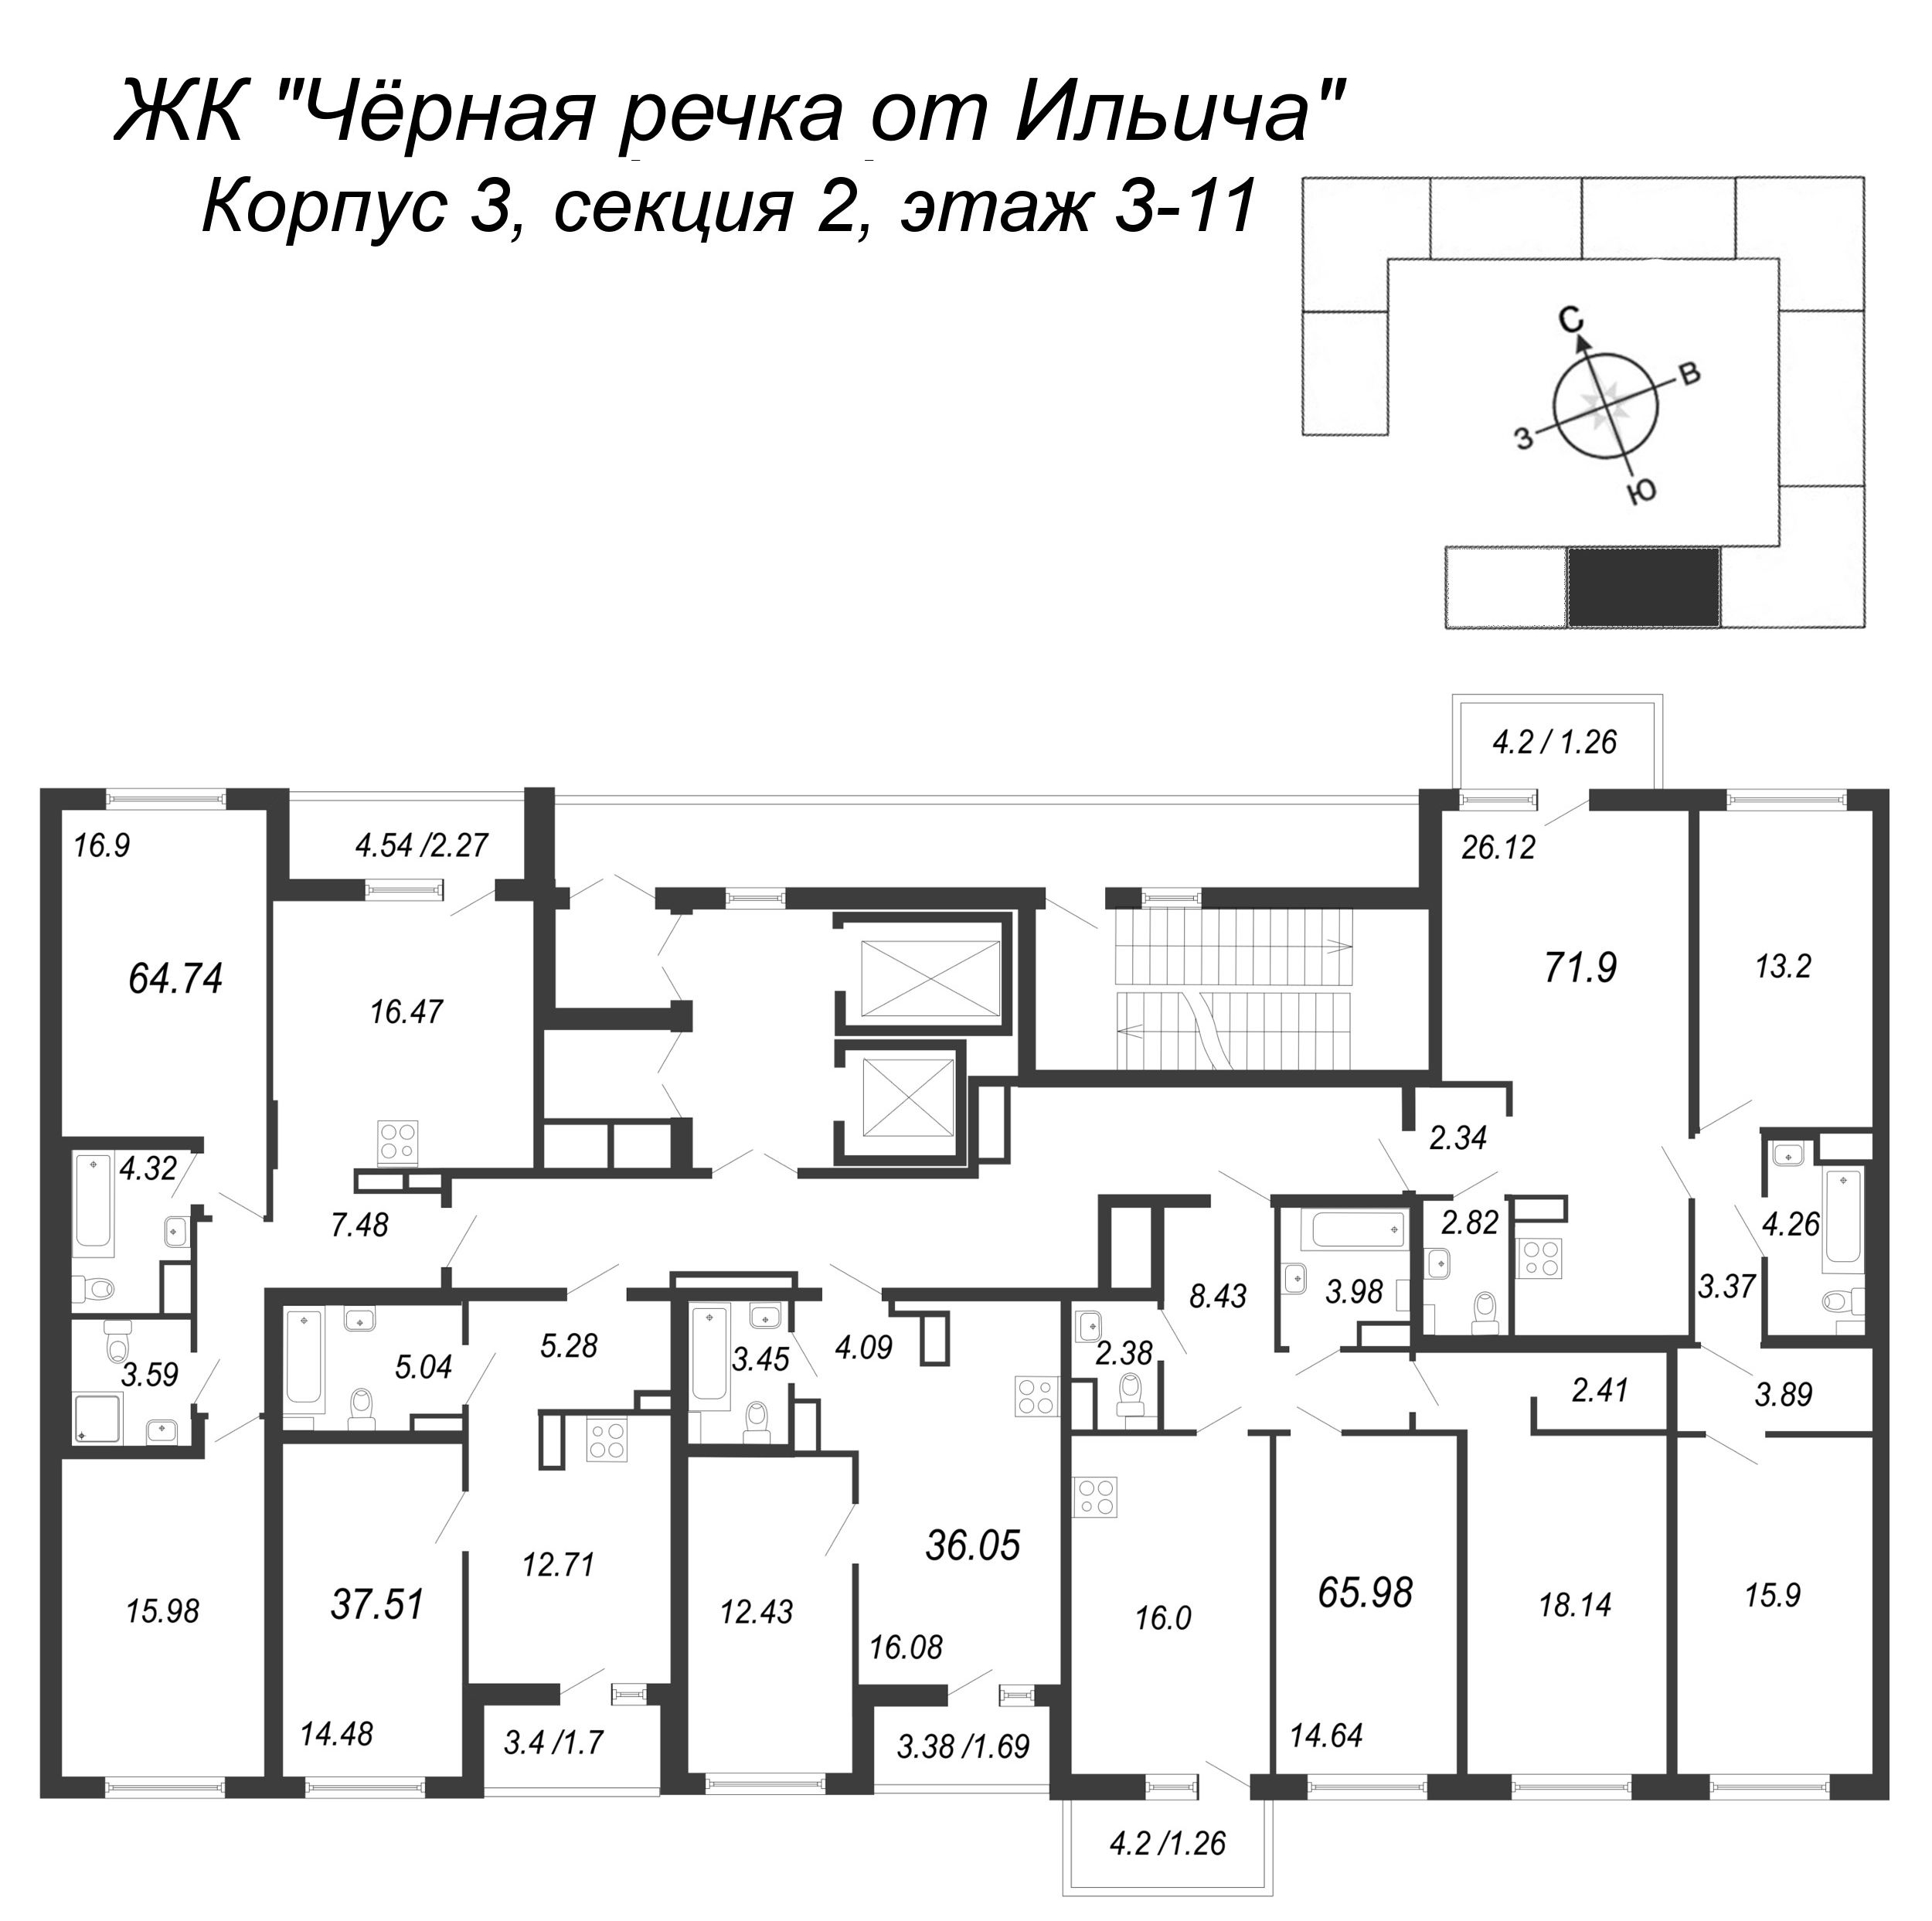 3-комнатная (Евро) квартира, 65.98 м² в ЖК "Чёрная речка от Ильича" - планировка этажа